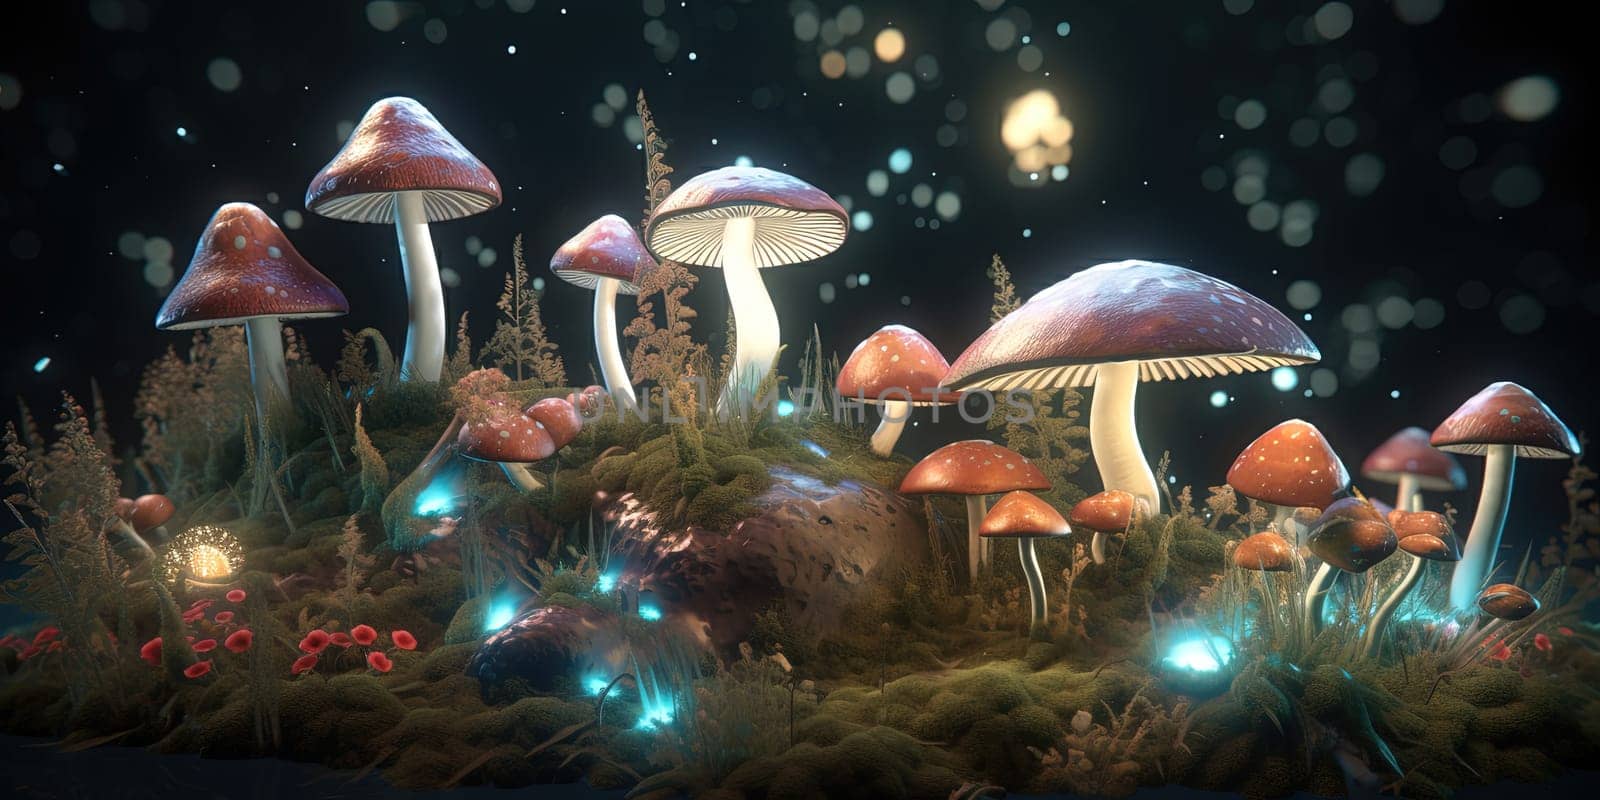 Magical Illustration Of Illuminated Mushrooms by GekaSkr